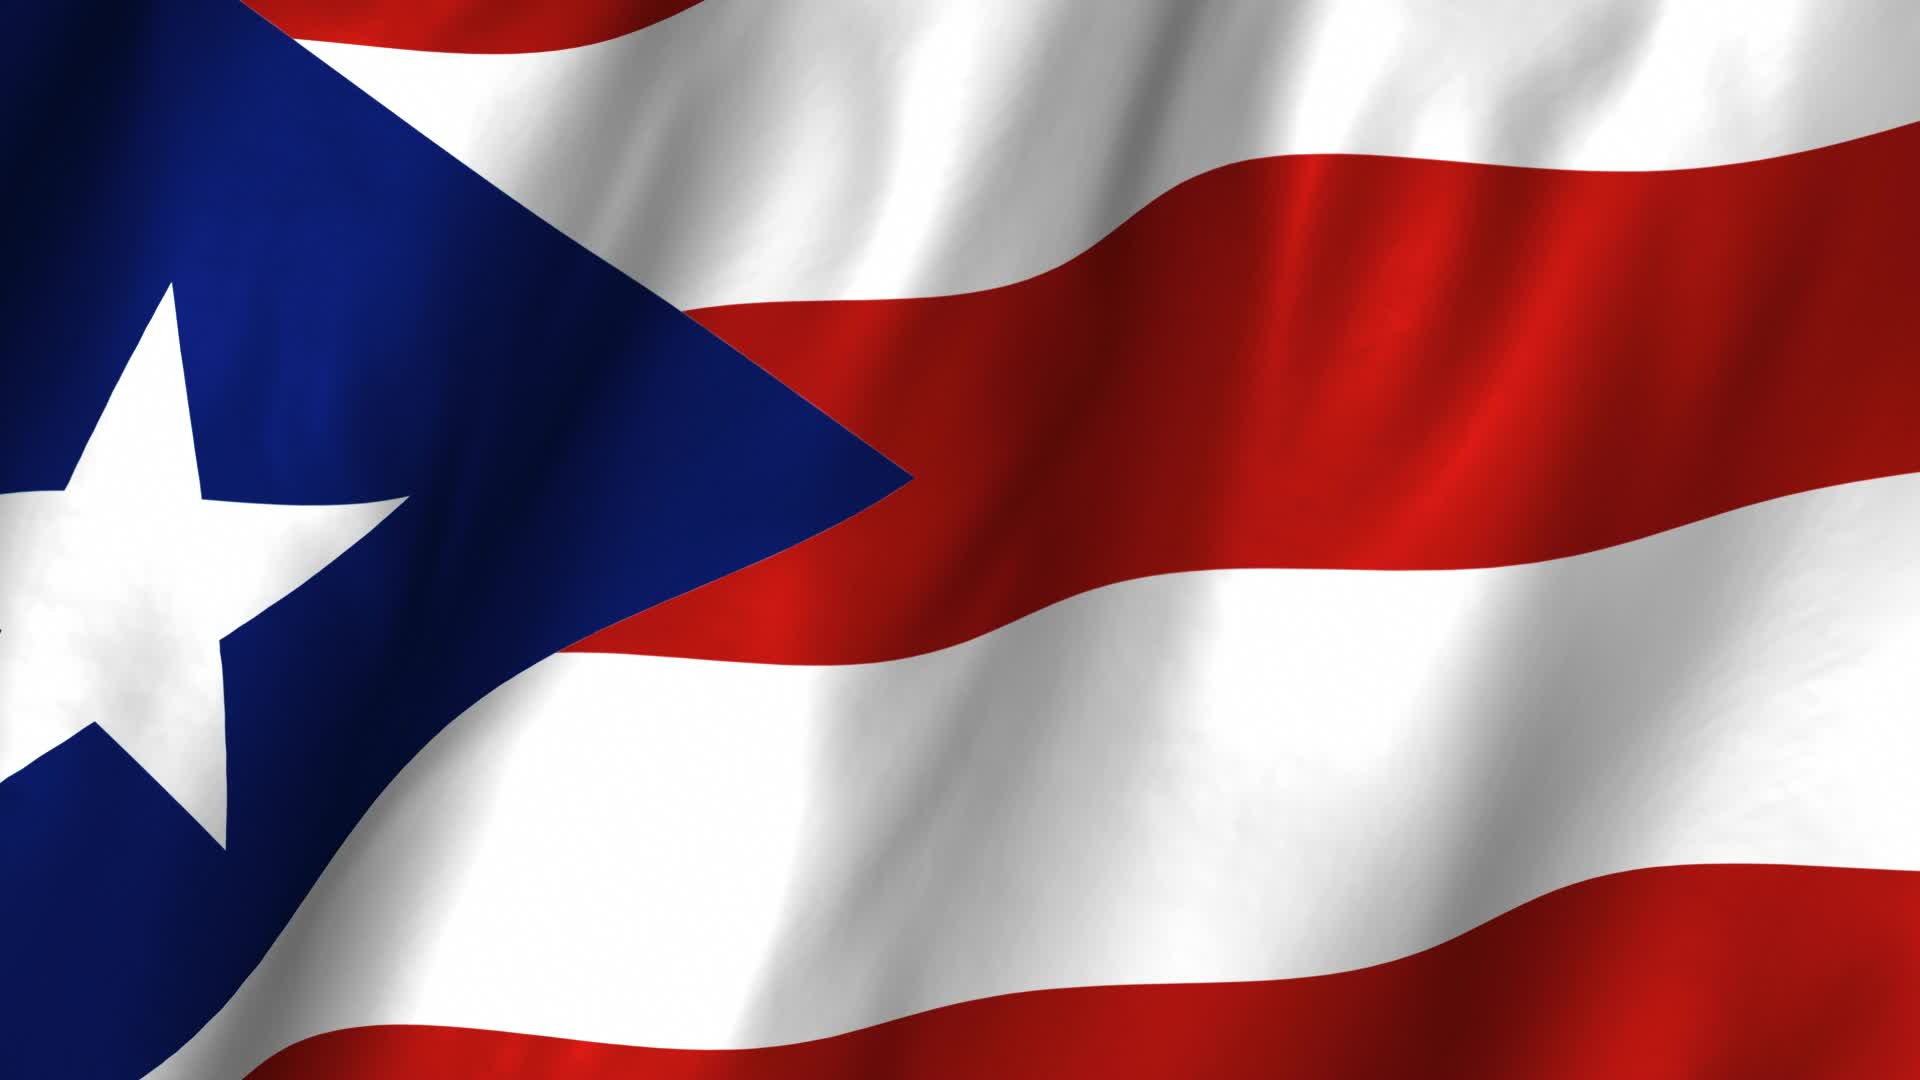 Hurricane Donations for Puerto Rico